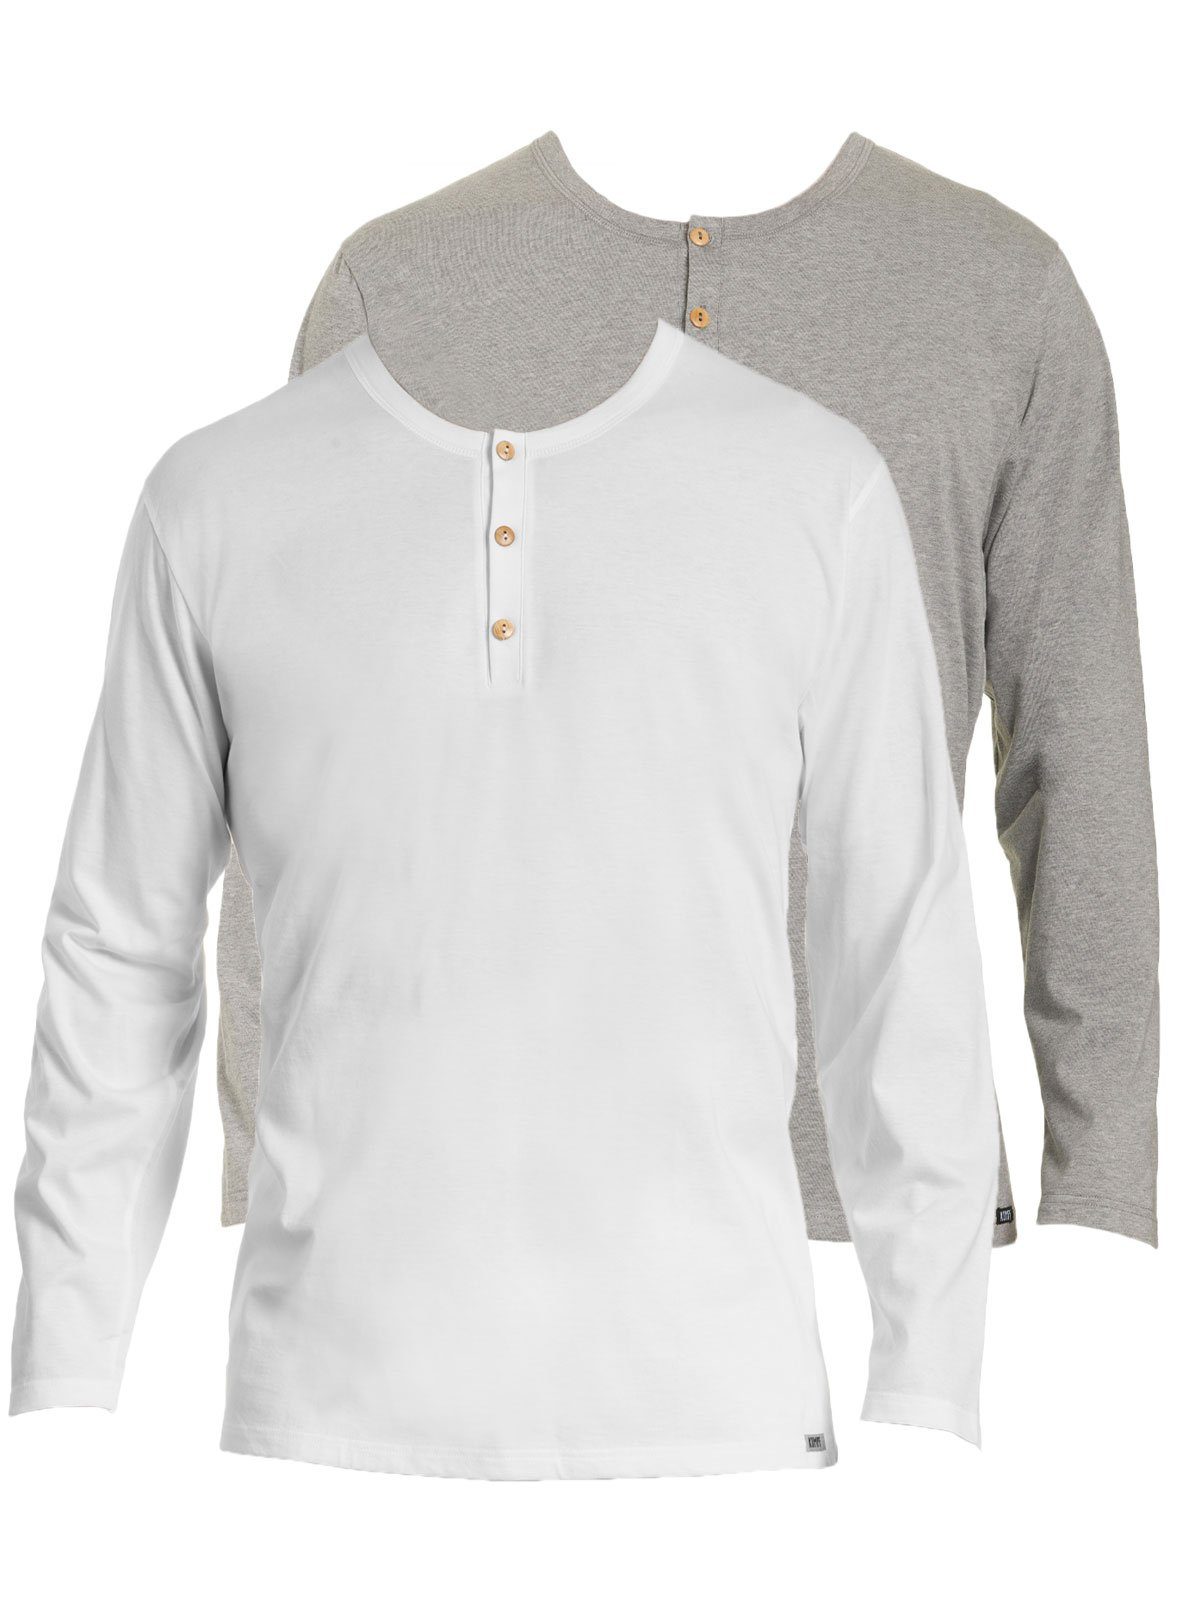 KUMPF Unterziehshirt 2er Sparpack Herren langarm Shirt Bio Cotton (Spar-Set, 2-St) hohe Markenqualität stahlgrau-melange weiss